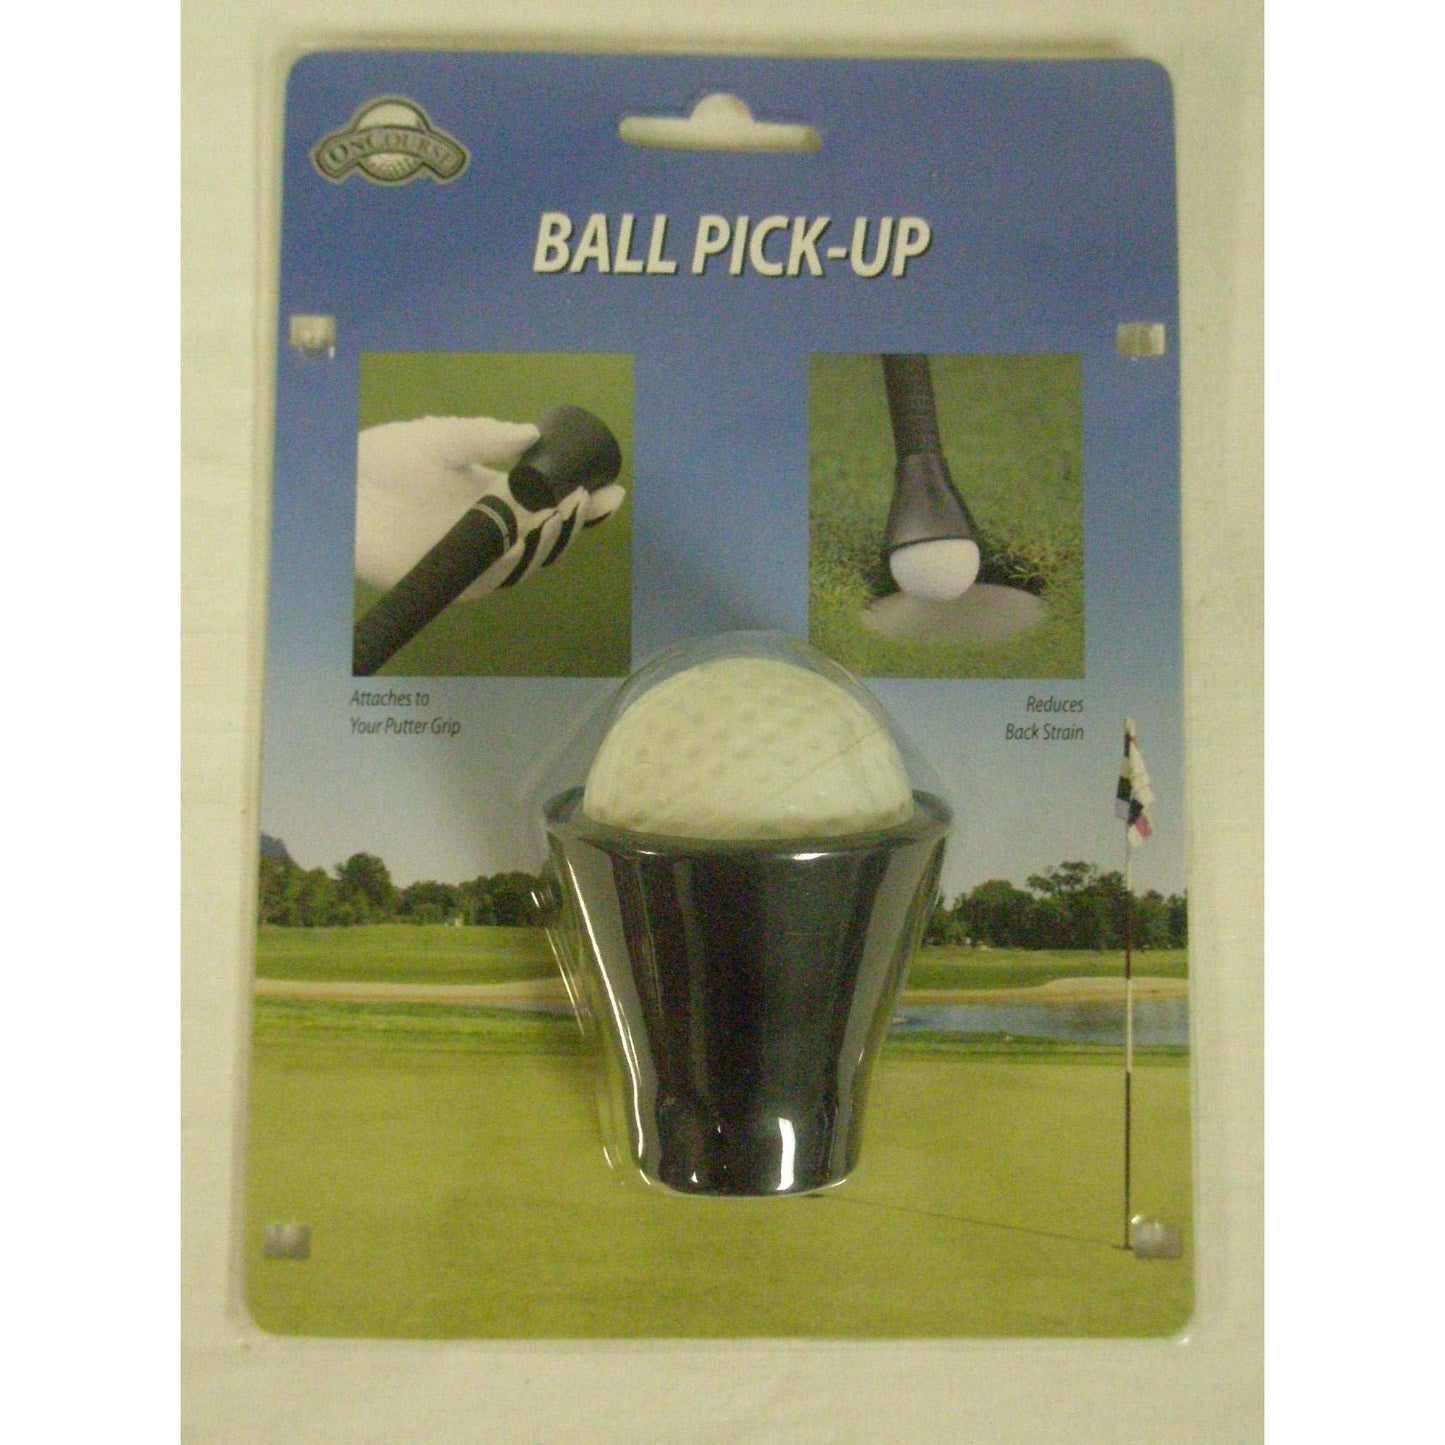 BALL PICK-UP - Grip On Golf & Pickleball Zone